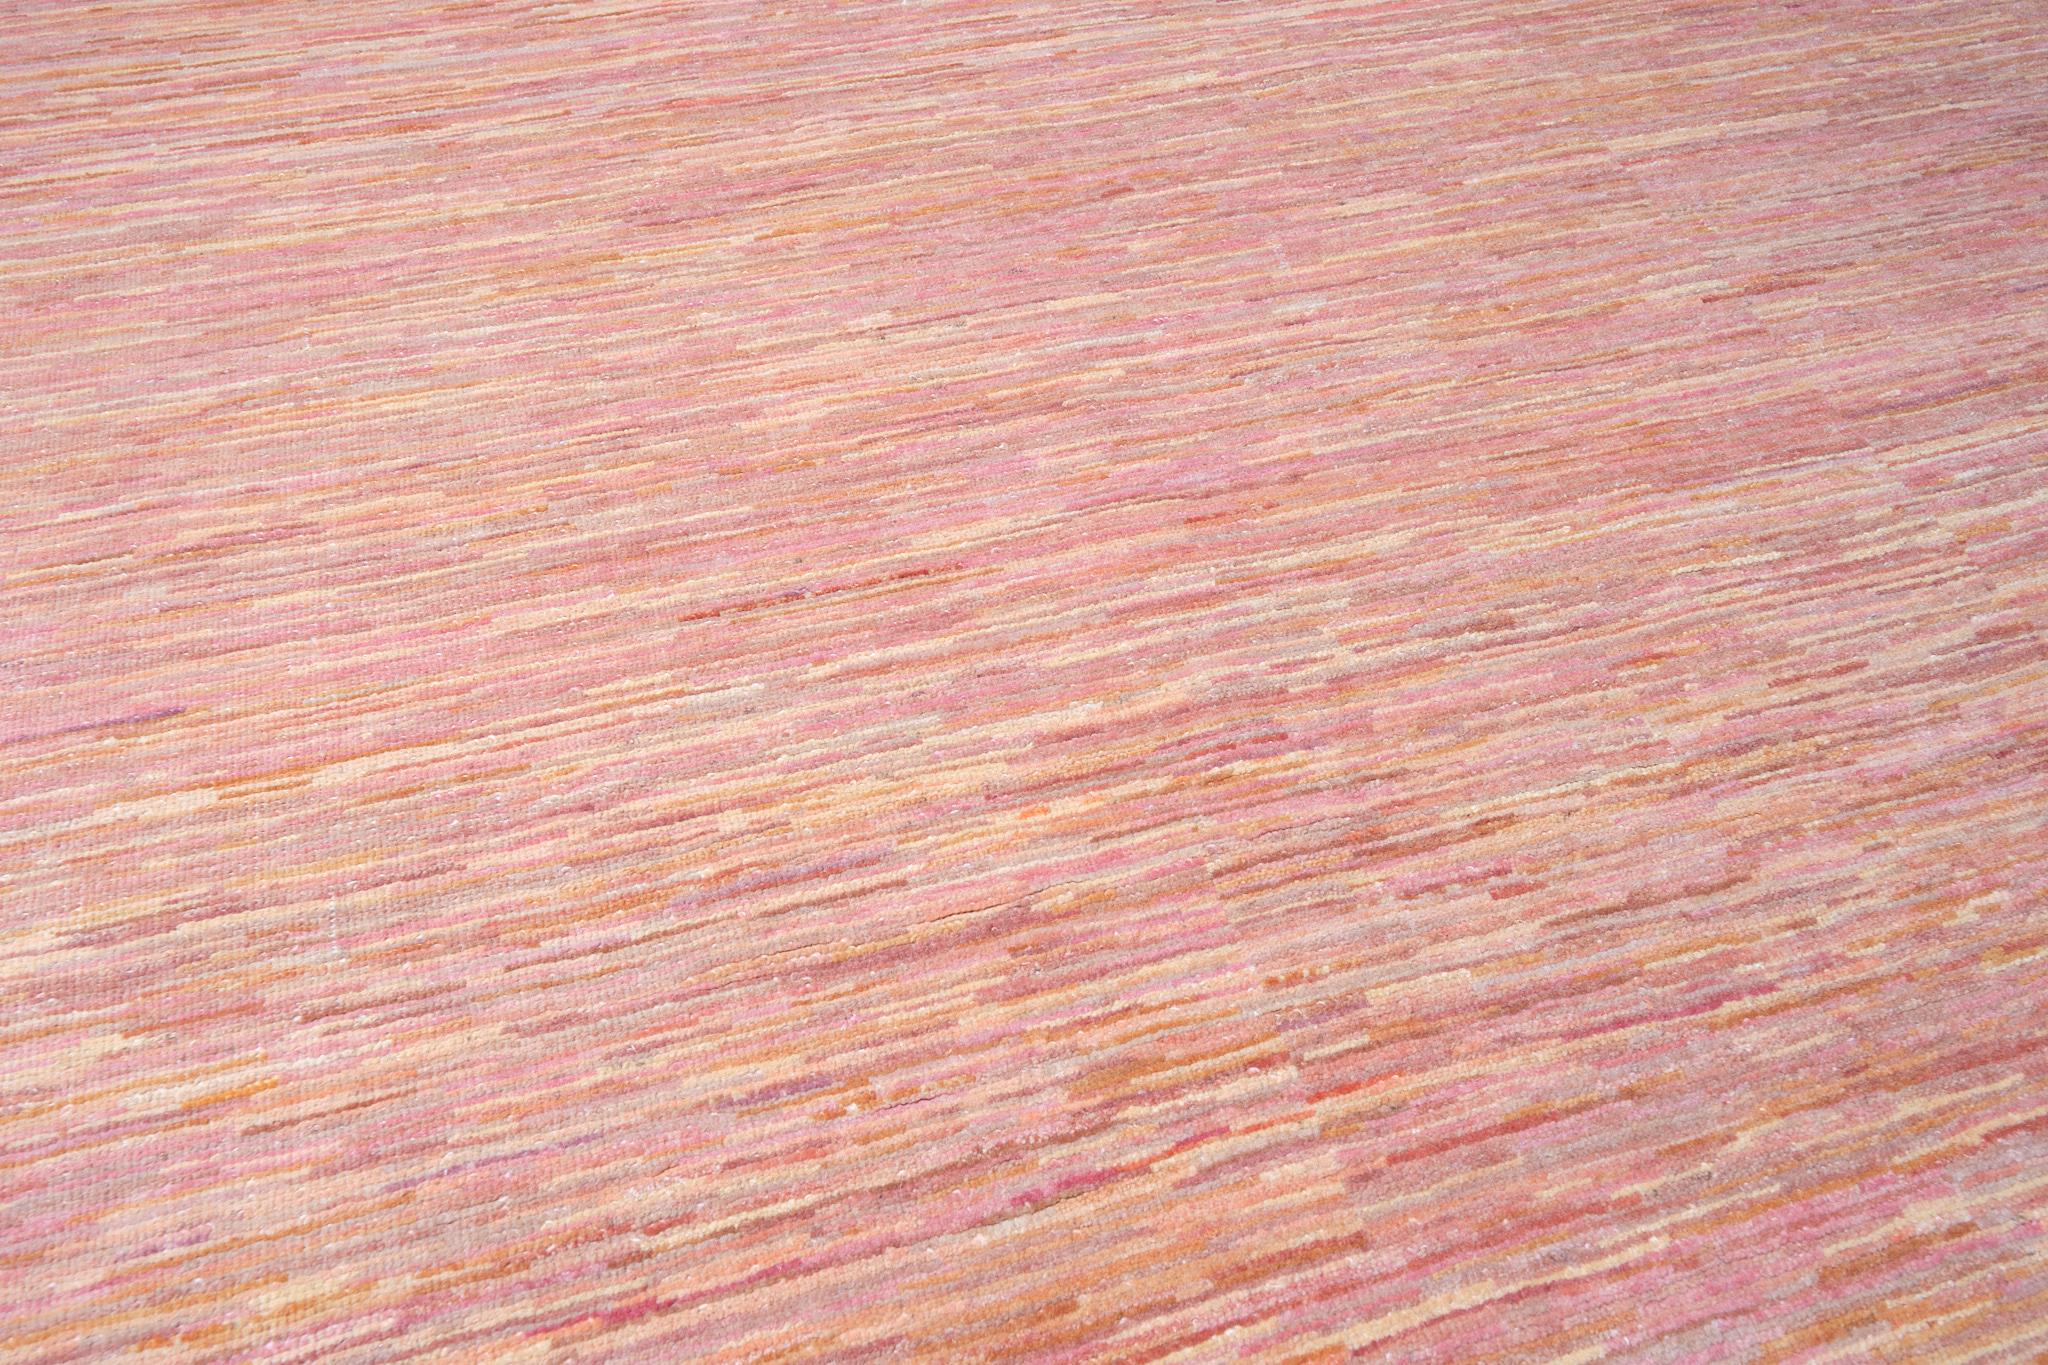 Turkish Ararat Rugs the Soft Pink Color Rug, Modern Carpet, Natural Dyed For Sale